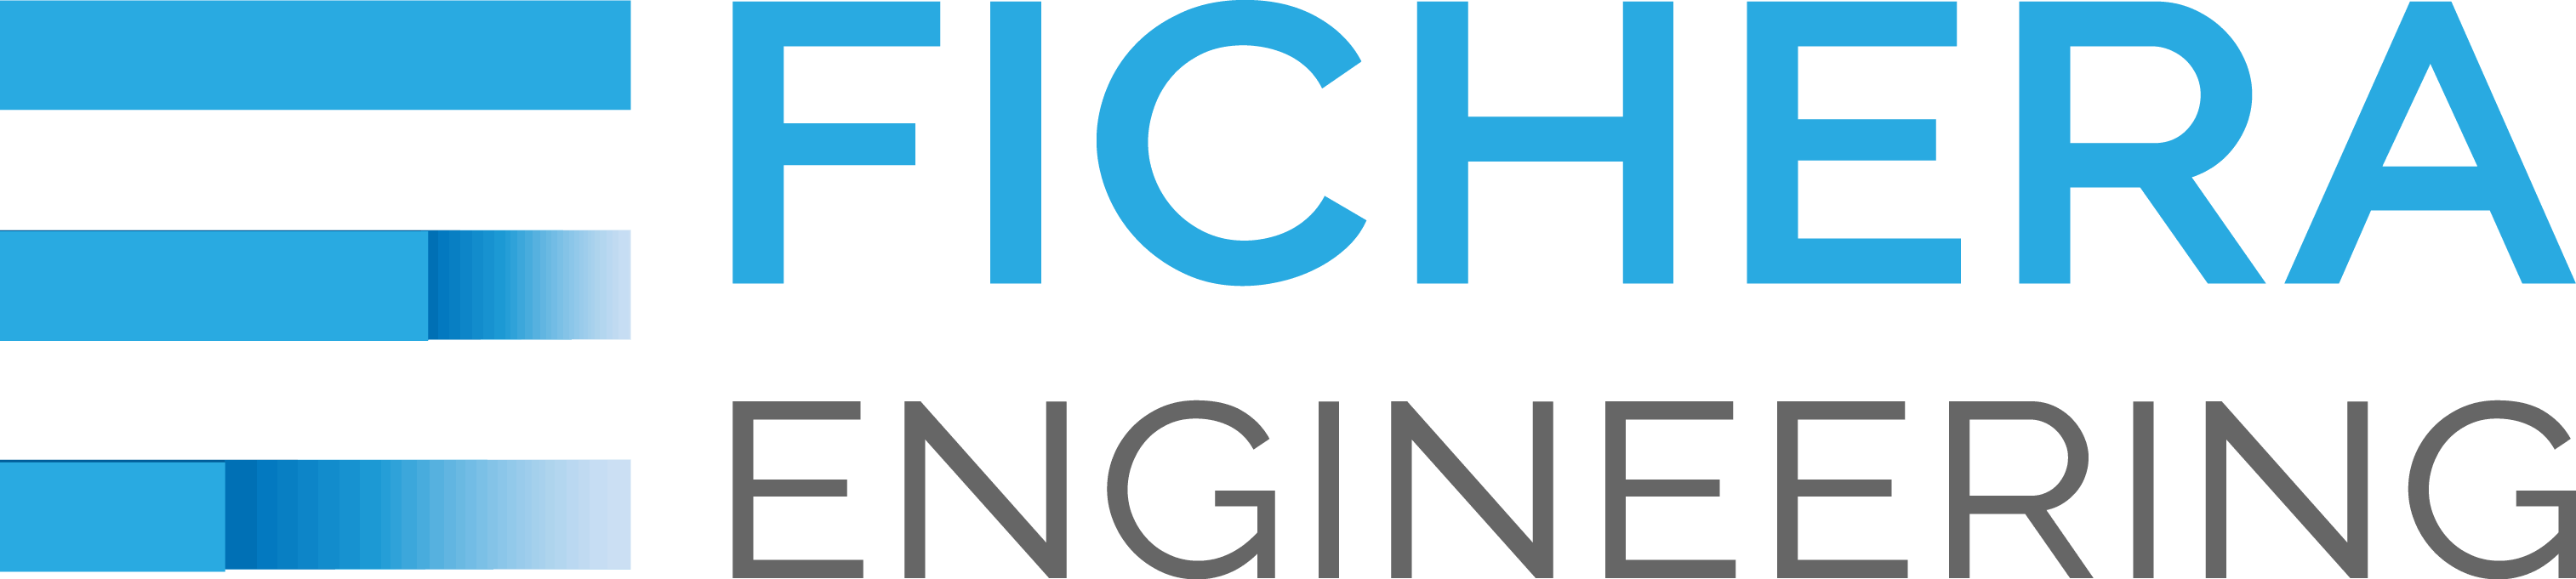 Fichera Engineering